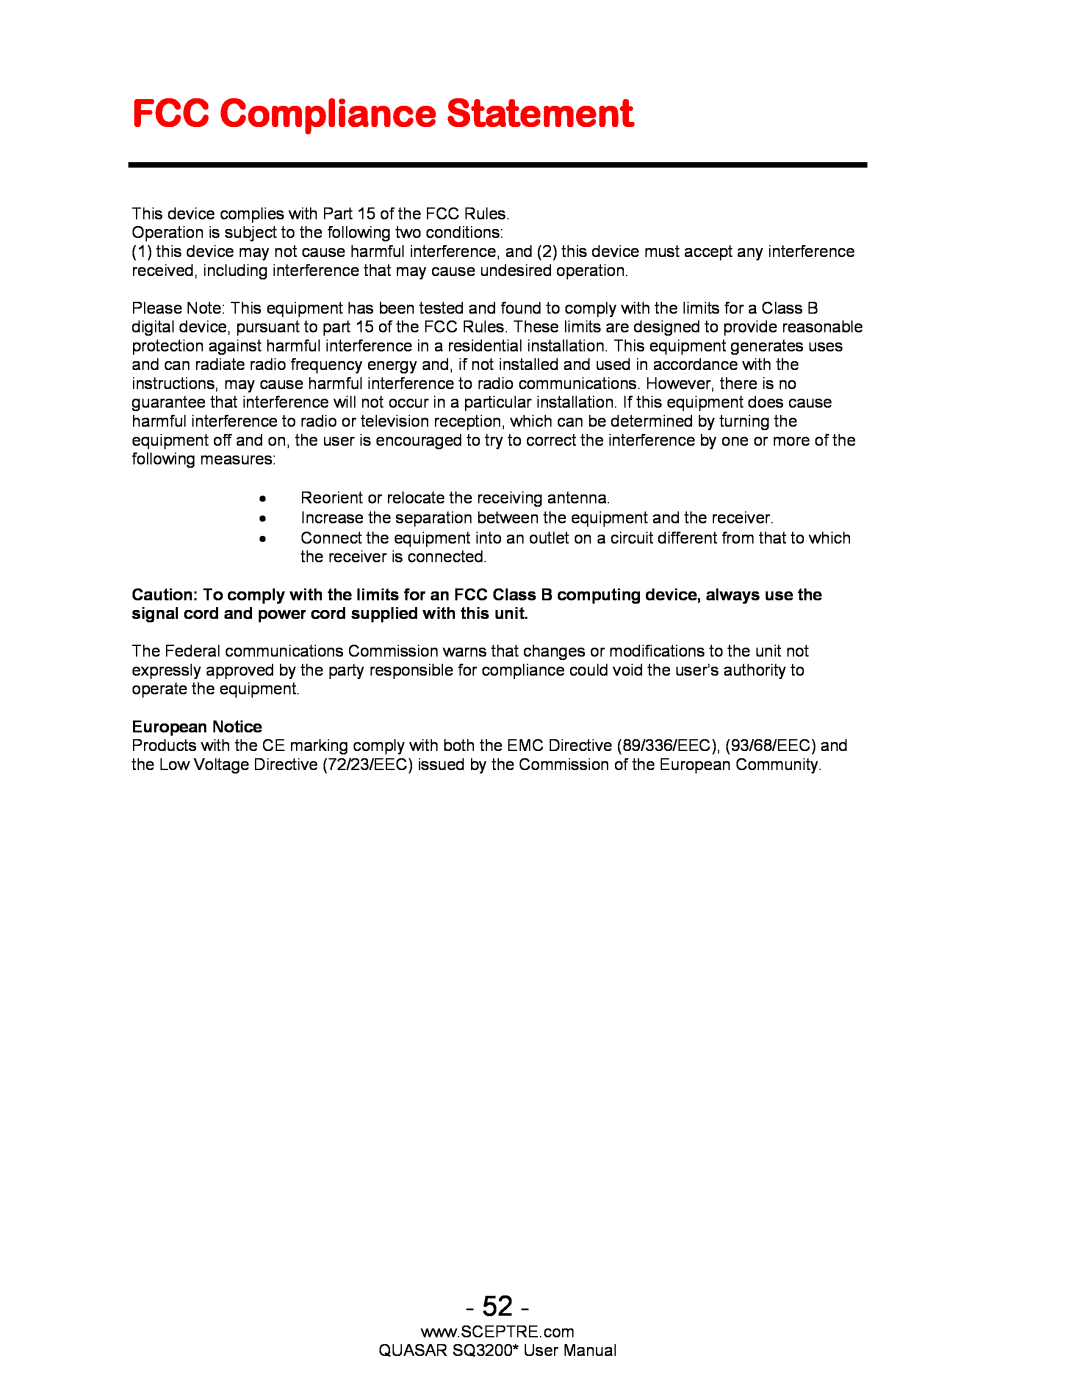 Sceptre Technologies HDTV, SQ3200 user manual FCC Compliance Statement, European Notice 